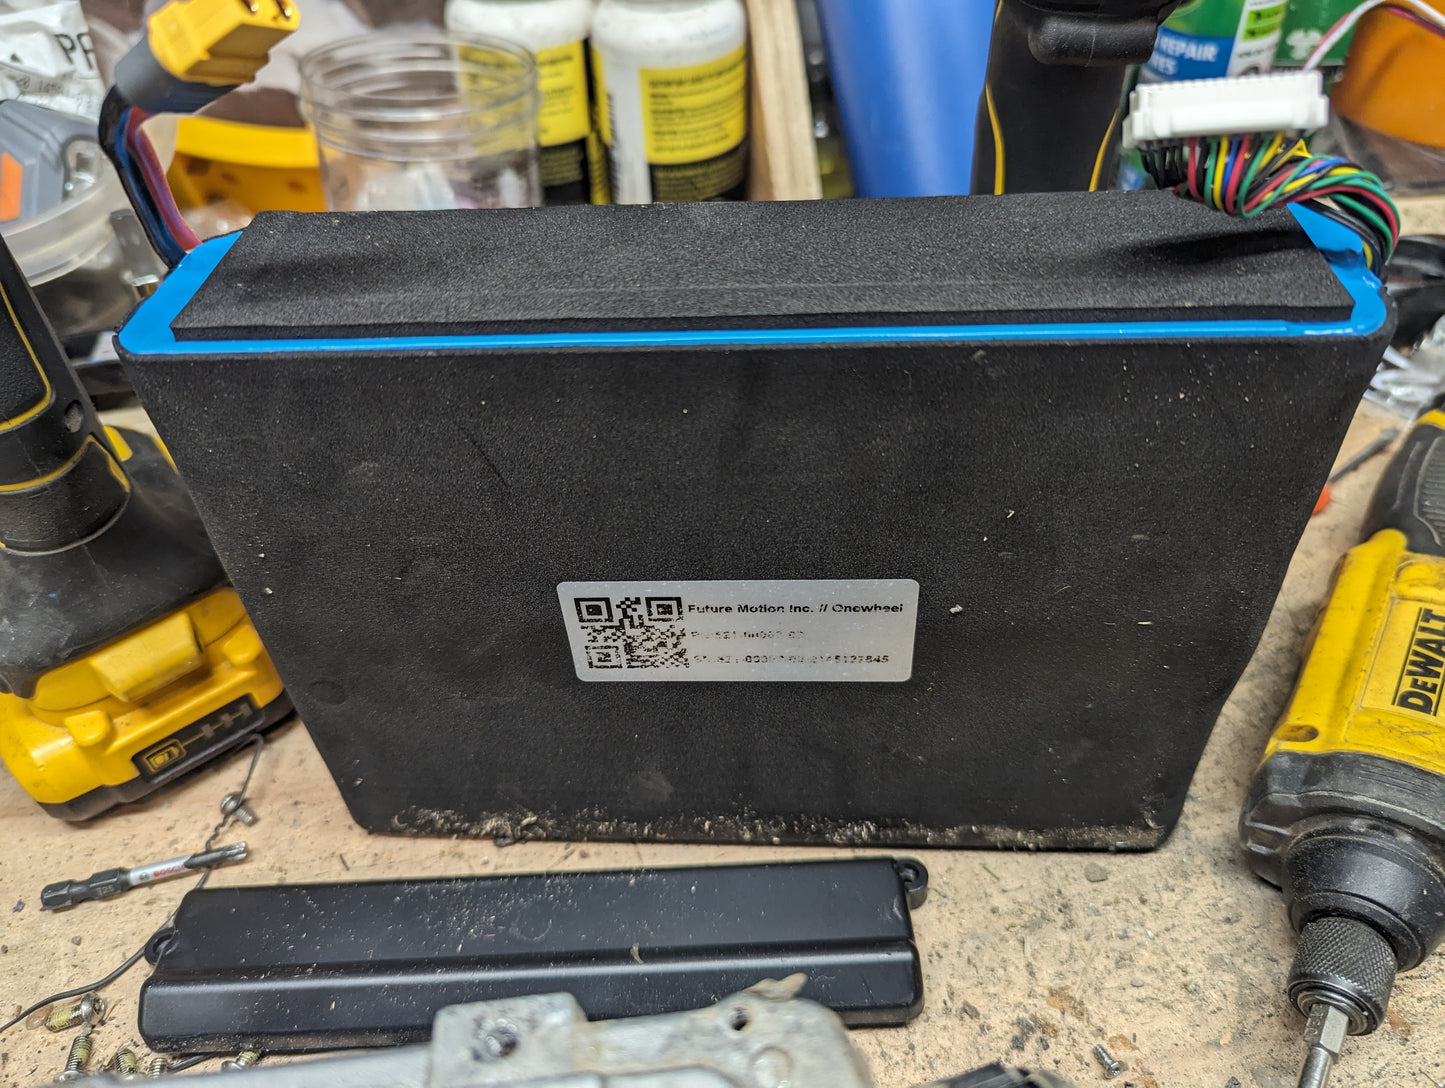 Onewheel GT battery - 900 miles